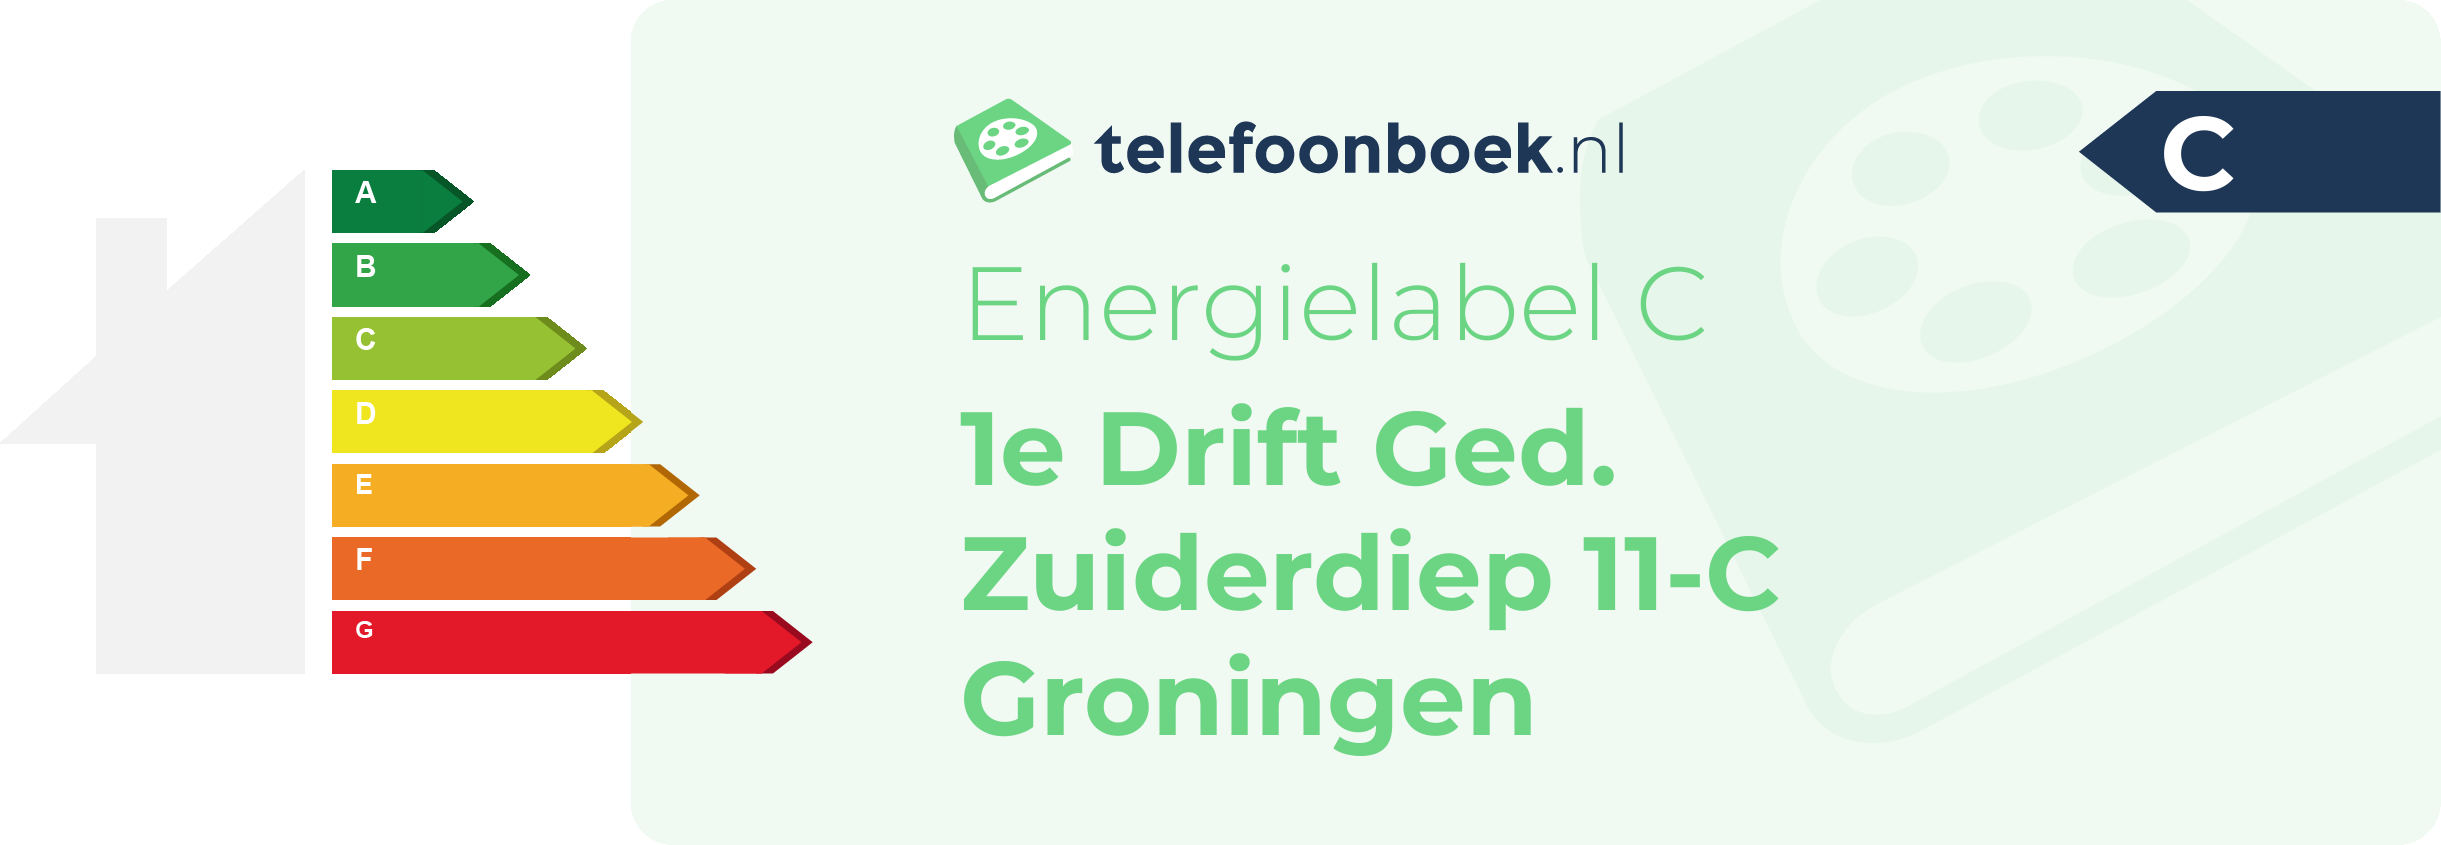 Energielabel 1e Drift Ged. Zuiderdiep 11-C Groningen